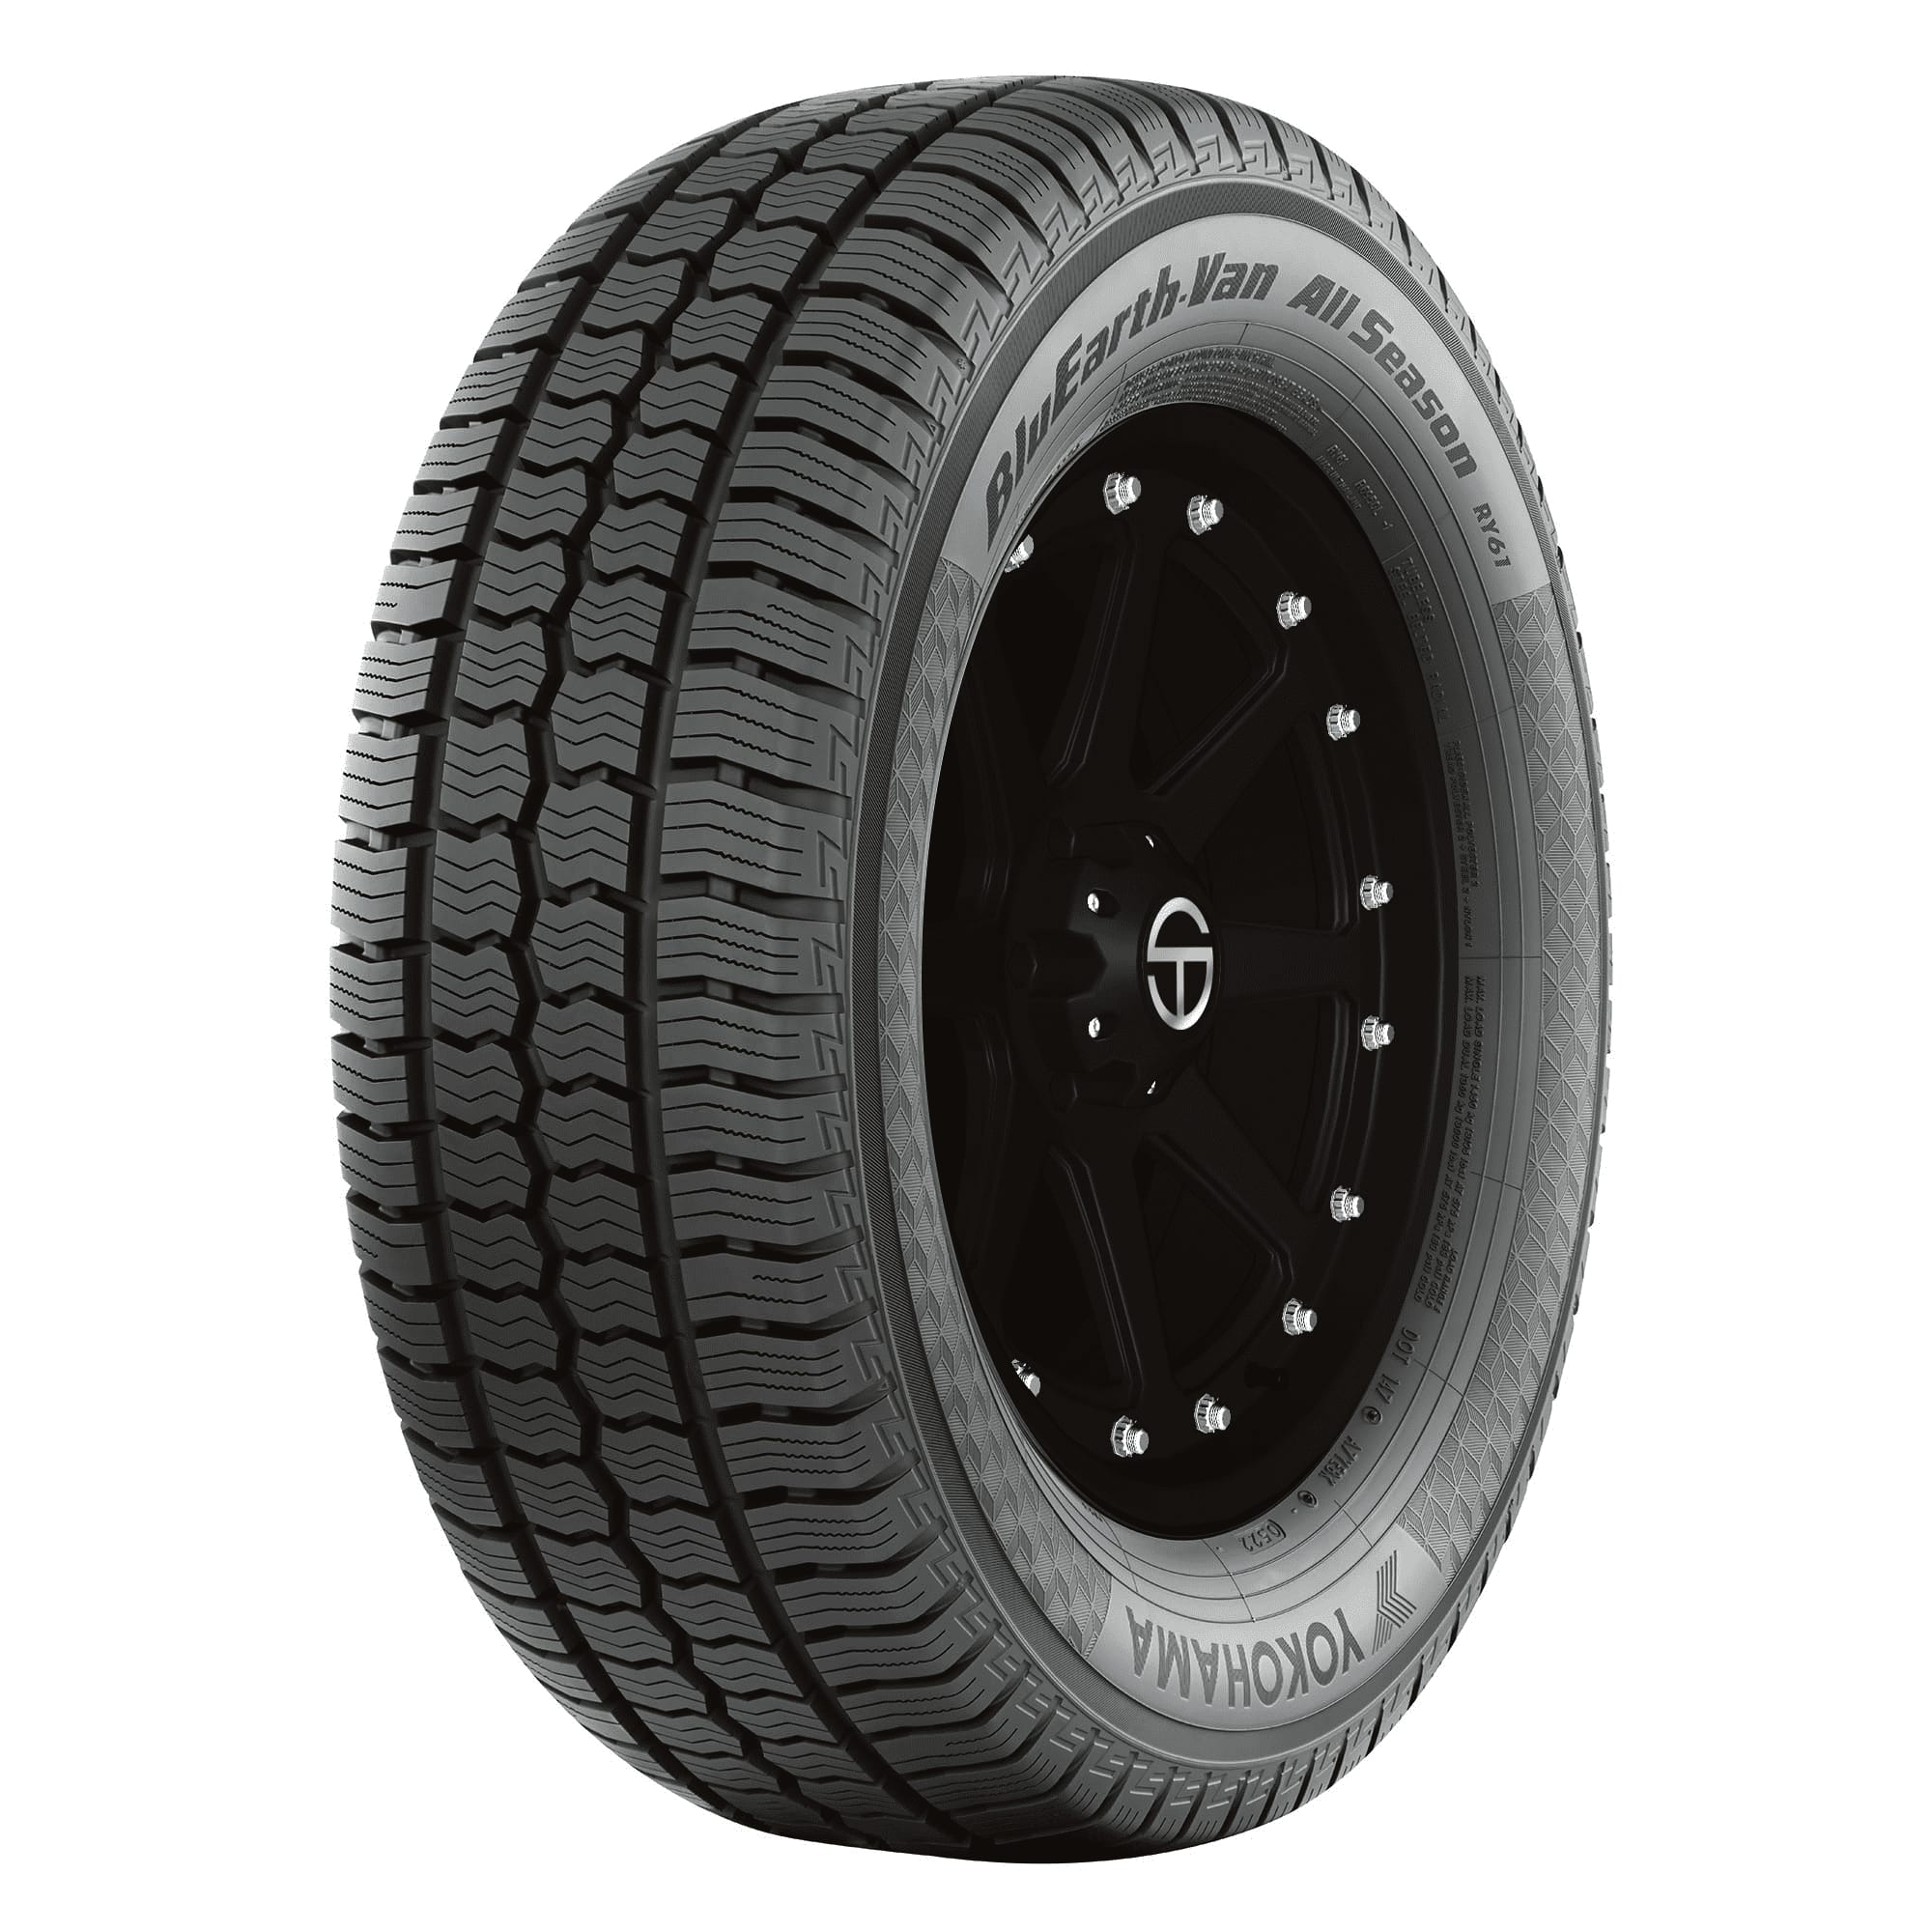 Buy Yokohama BluEarth-Van RY61 Season Tires All Online SimpleTire 